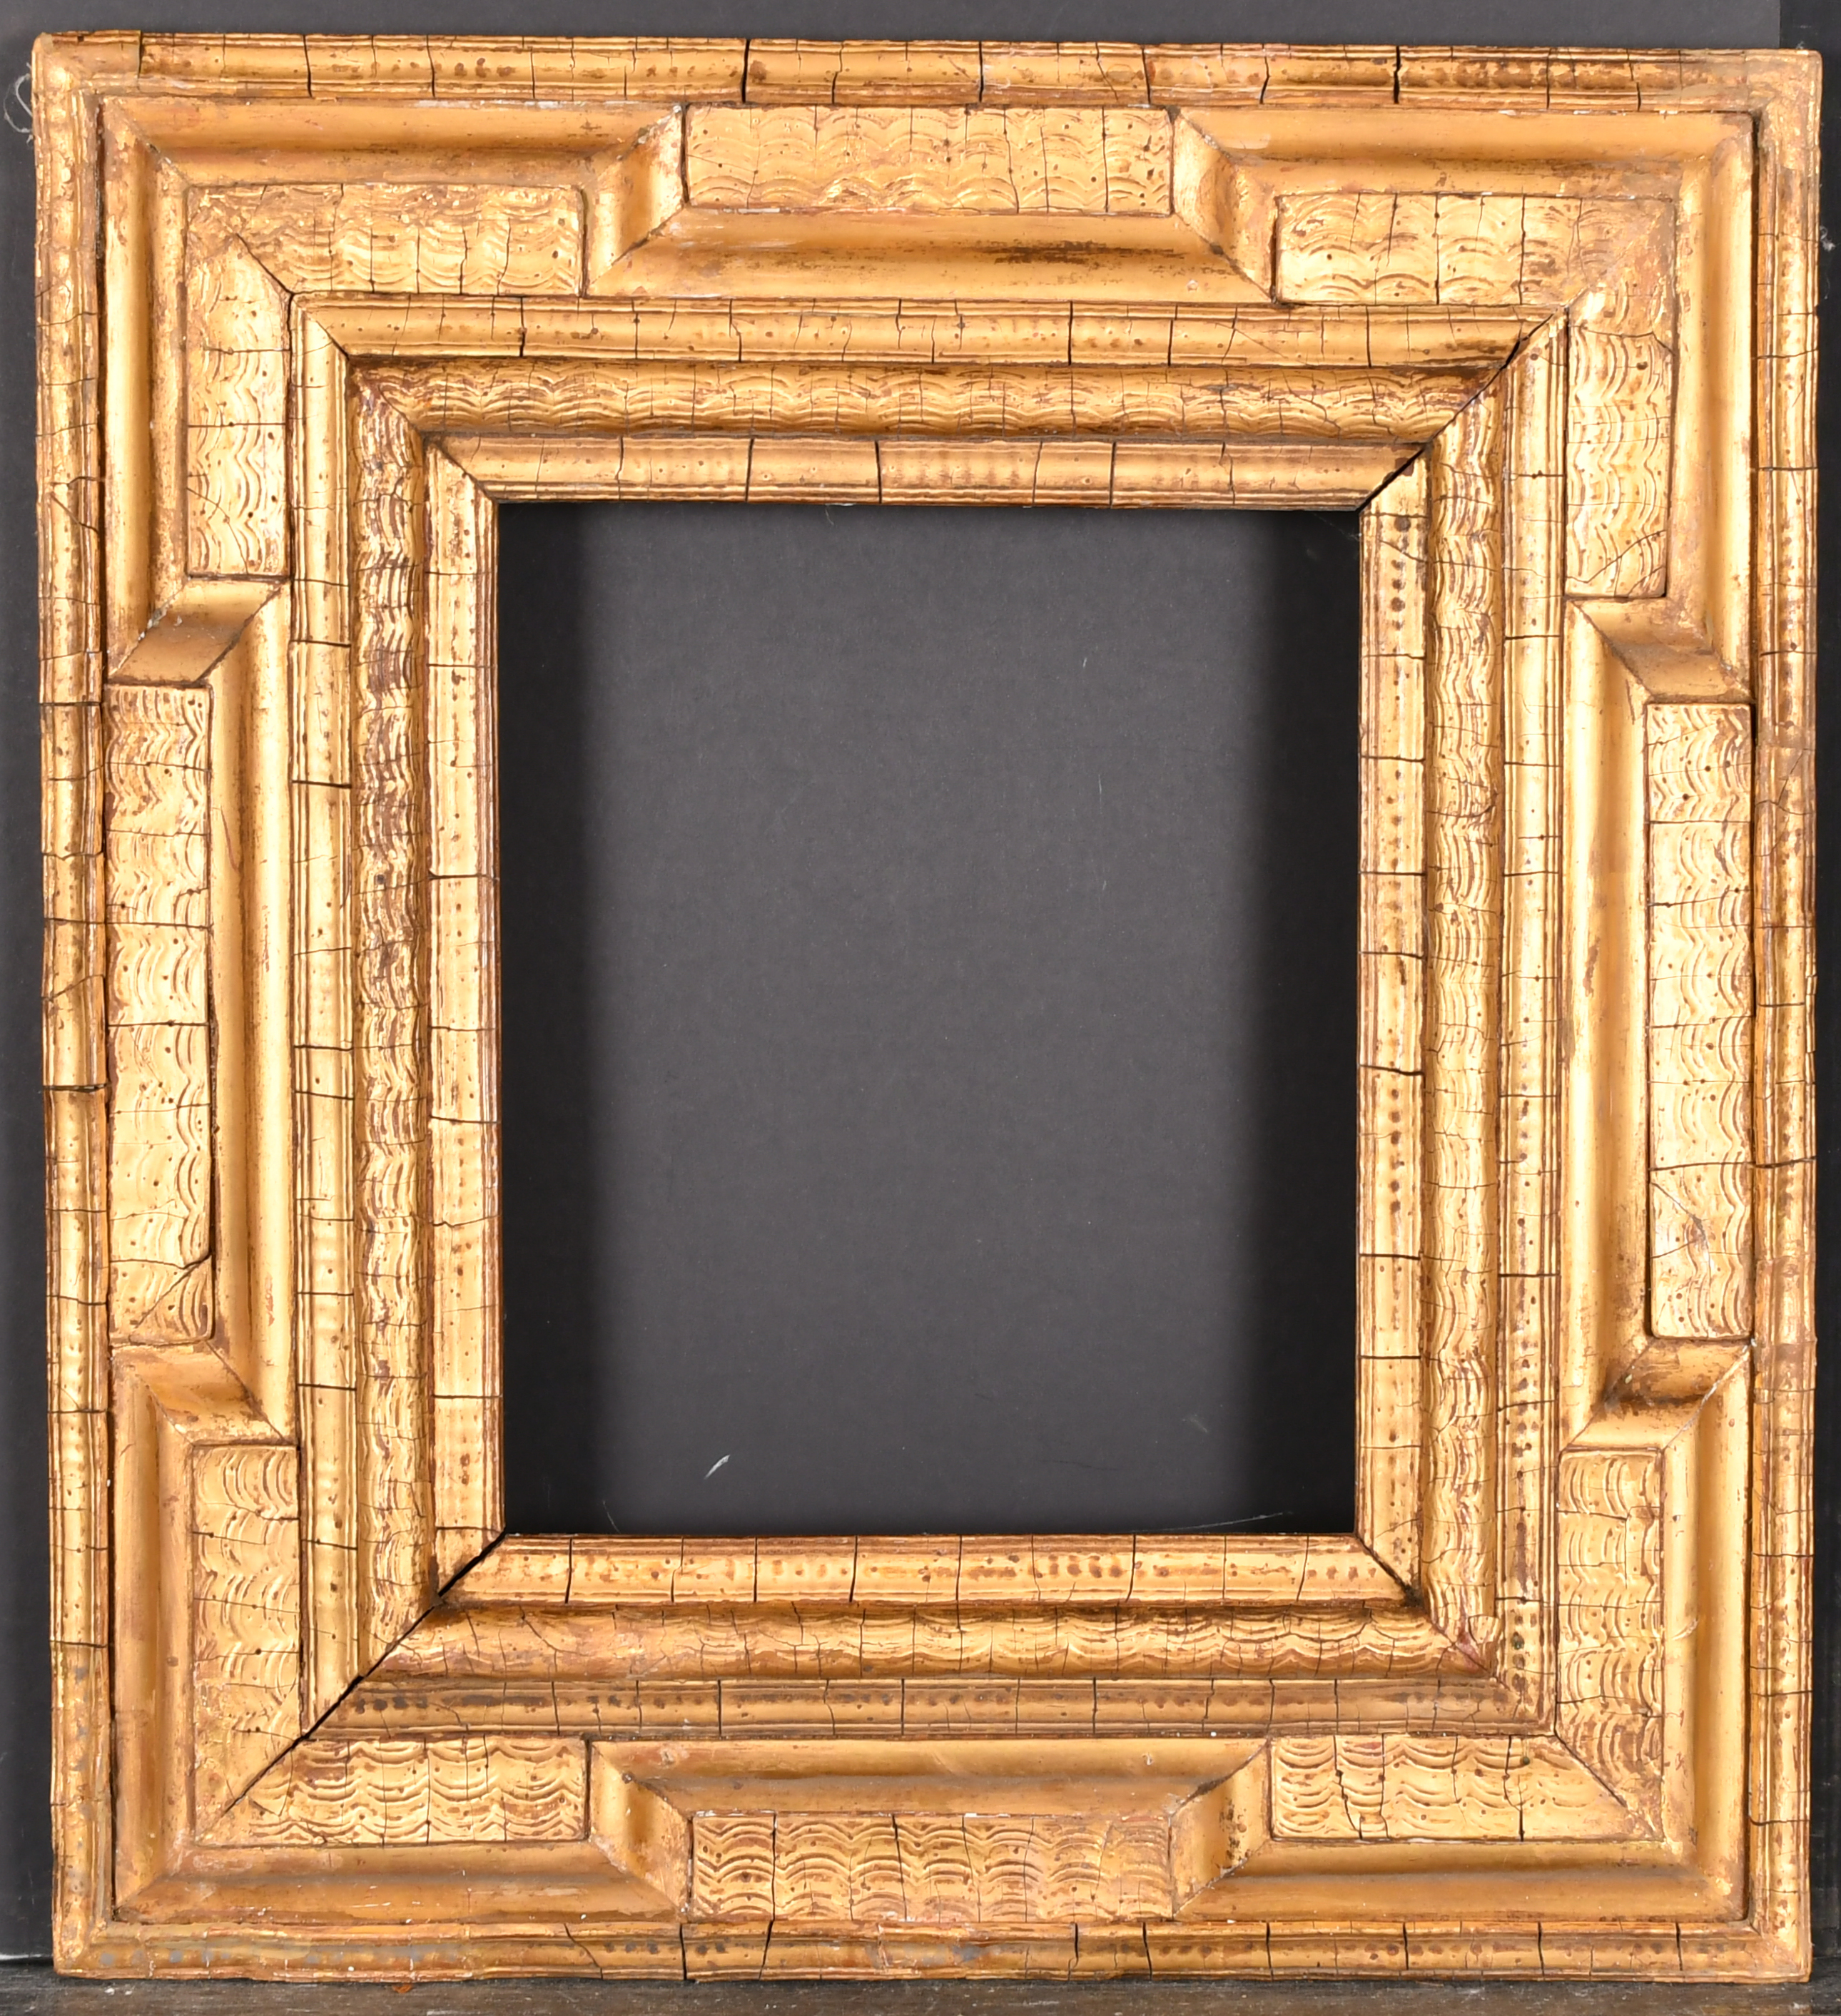 19th Century Dutch School. A Gold Painted Dutch Black Frame, rebate 13.25" x 11" (33.6 x 28cm) - Image 2 of 3